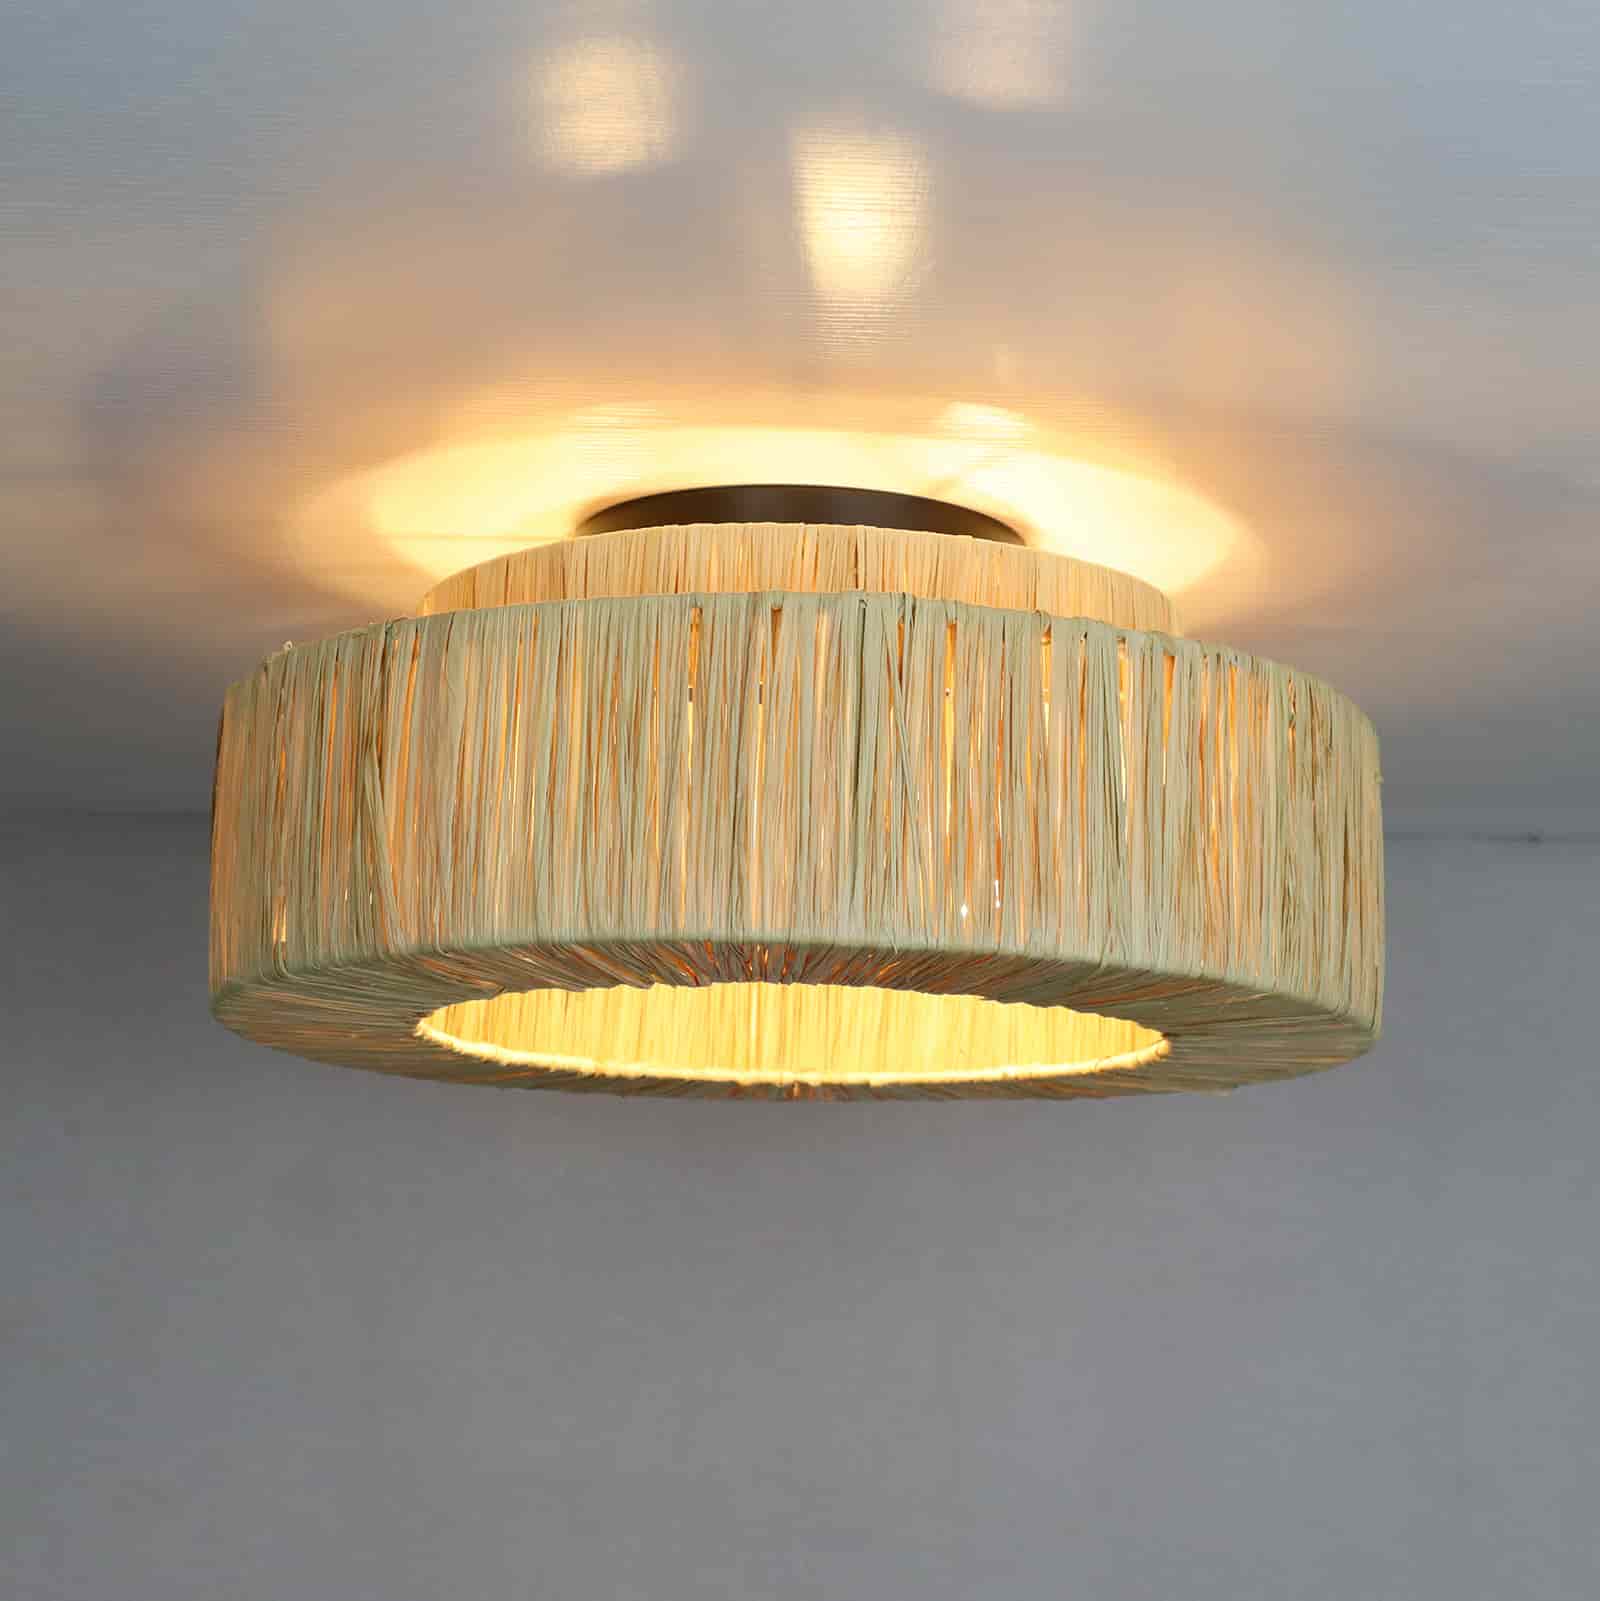 Hand-Woven 3-Lights Boho Semi Flush Mount Ceiling Light Fixture